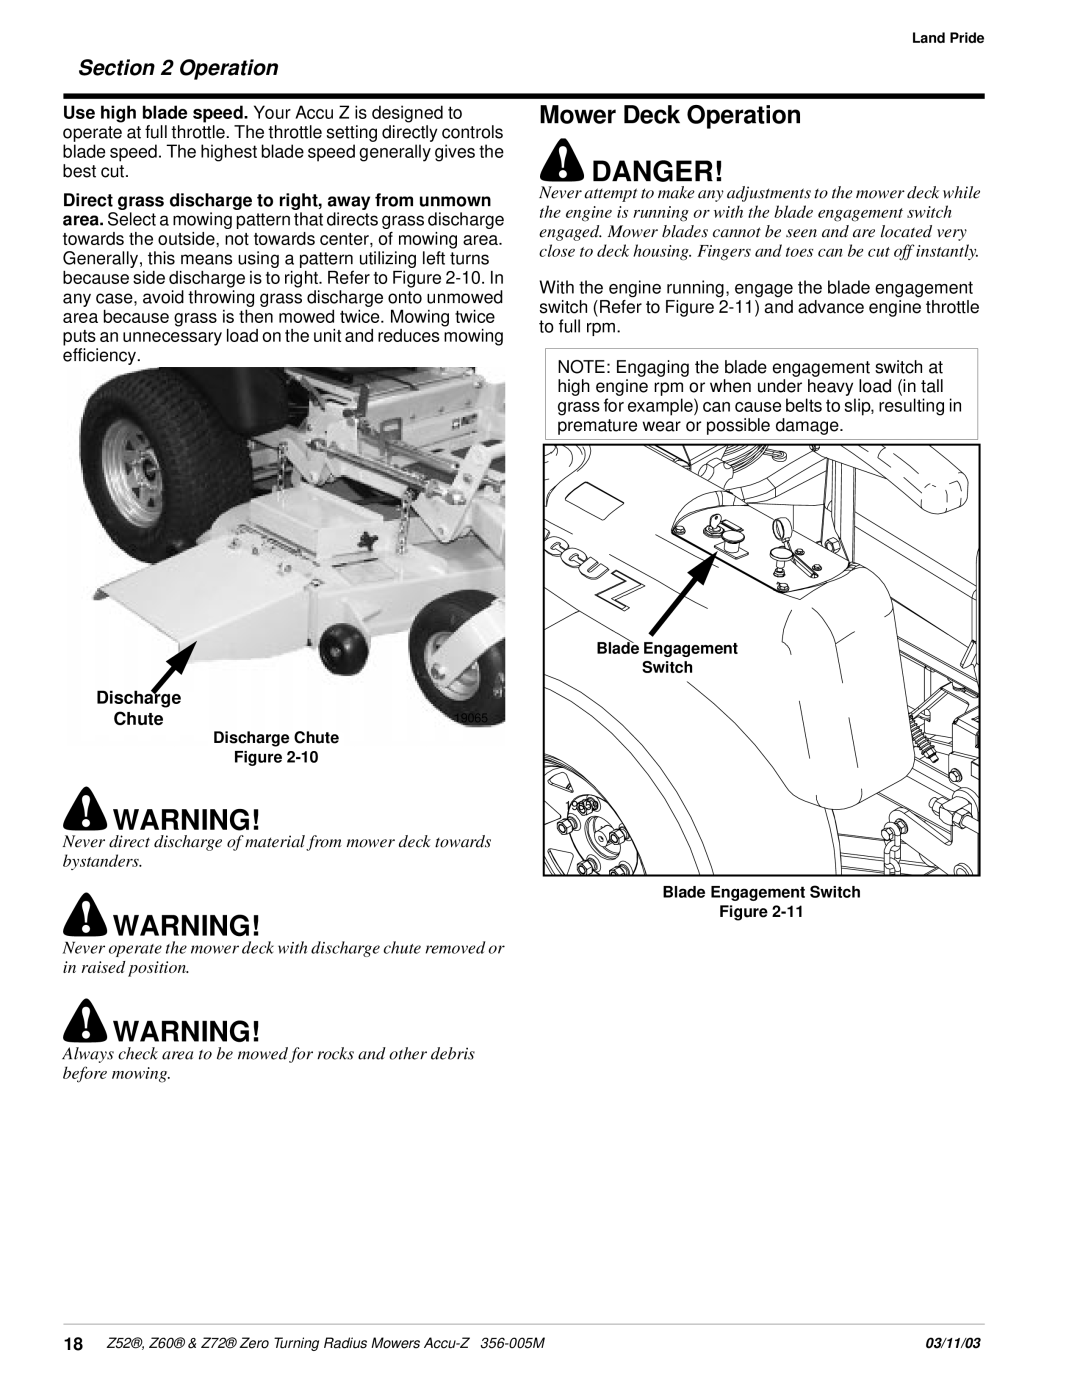 Land Pride Z52 , Z60, Z72 manual Mower Deck Operation, Danger, Discharge, Chute 